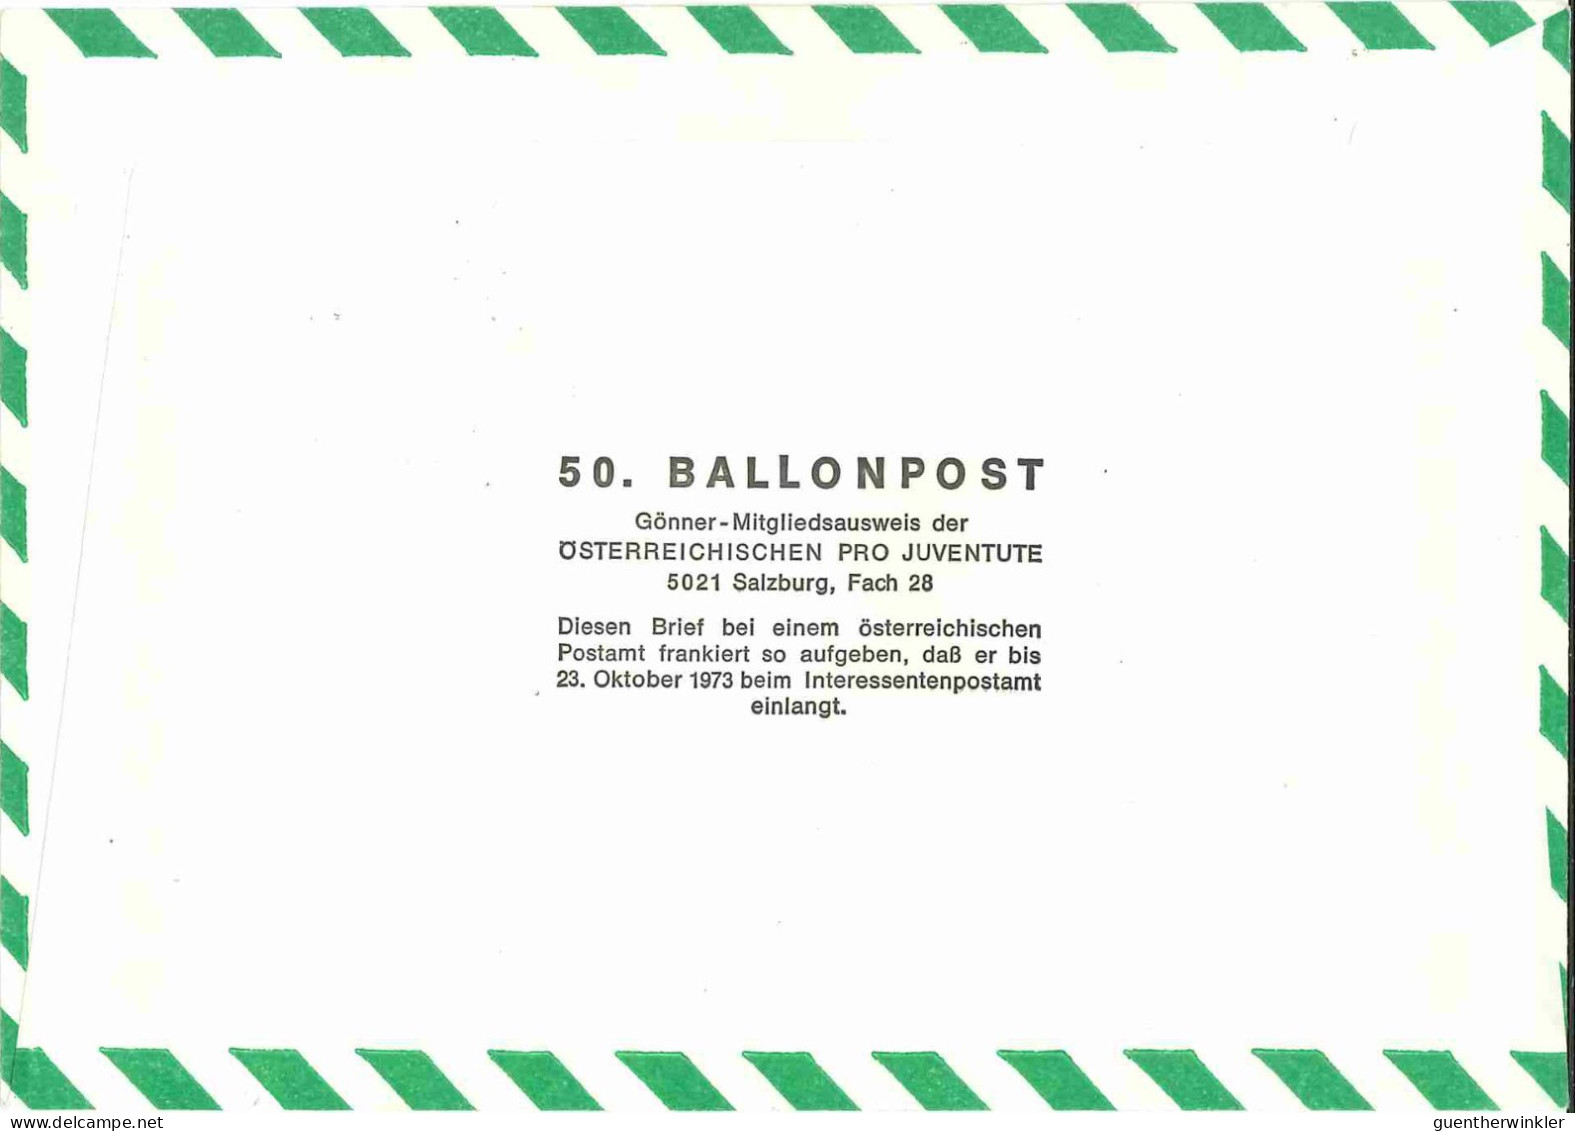 Regulärer Ballonpostflug Nr. 50d Der Pro Juventute [RBP50b] - Globos